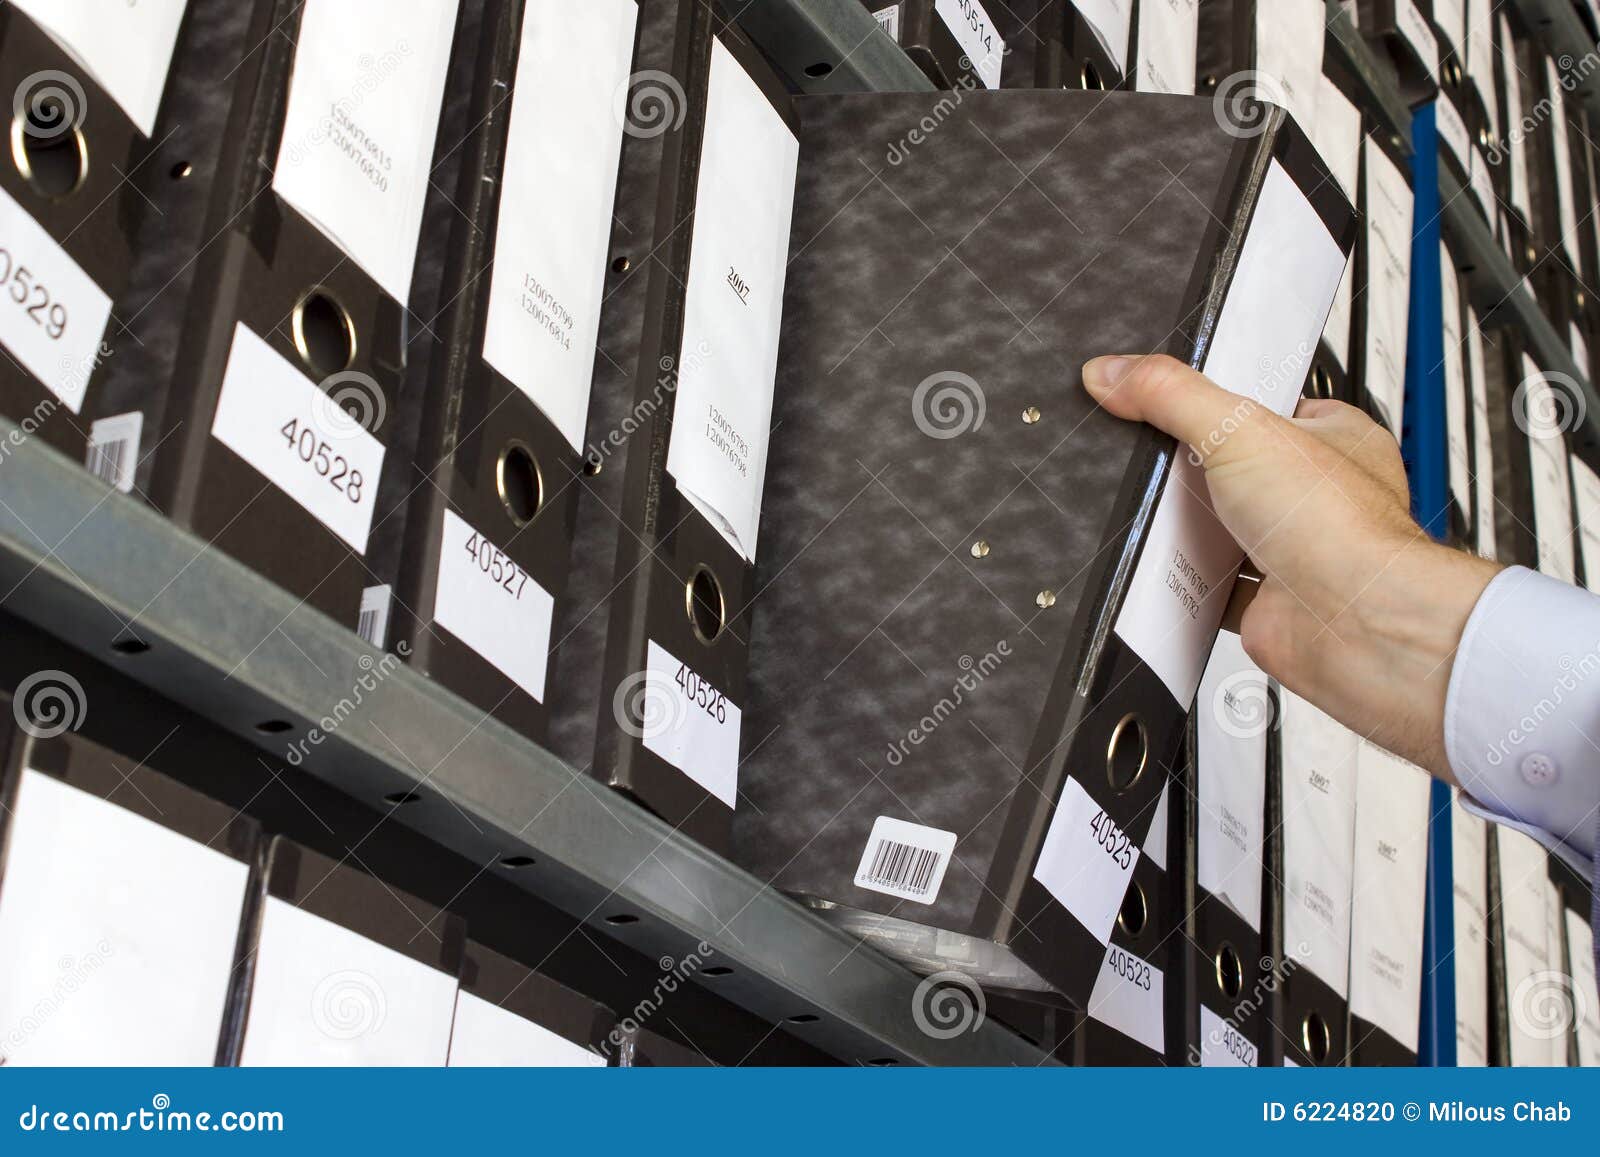 shelf with folders